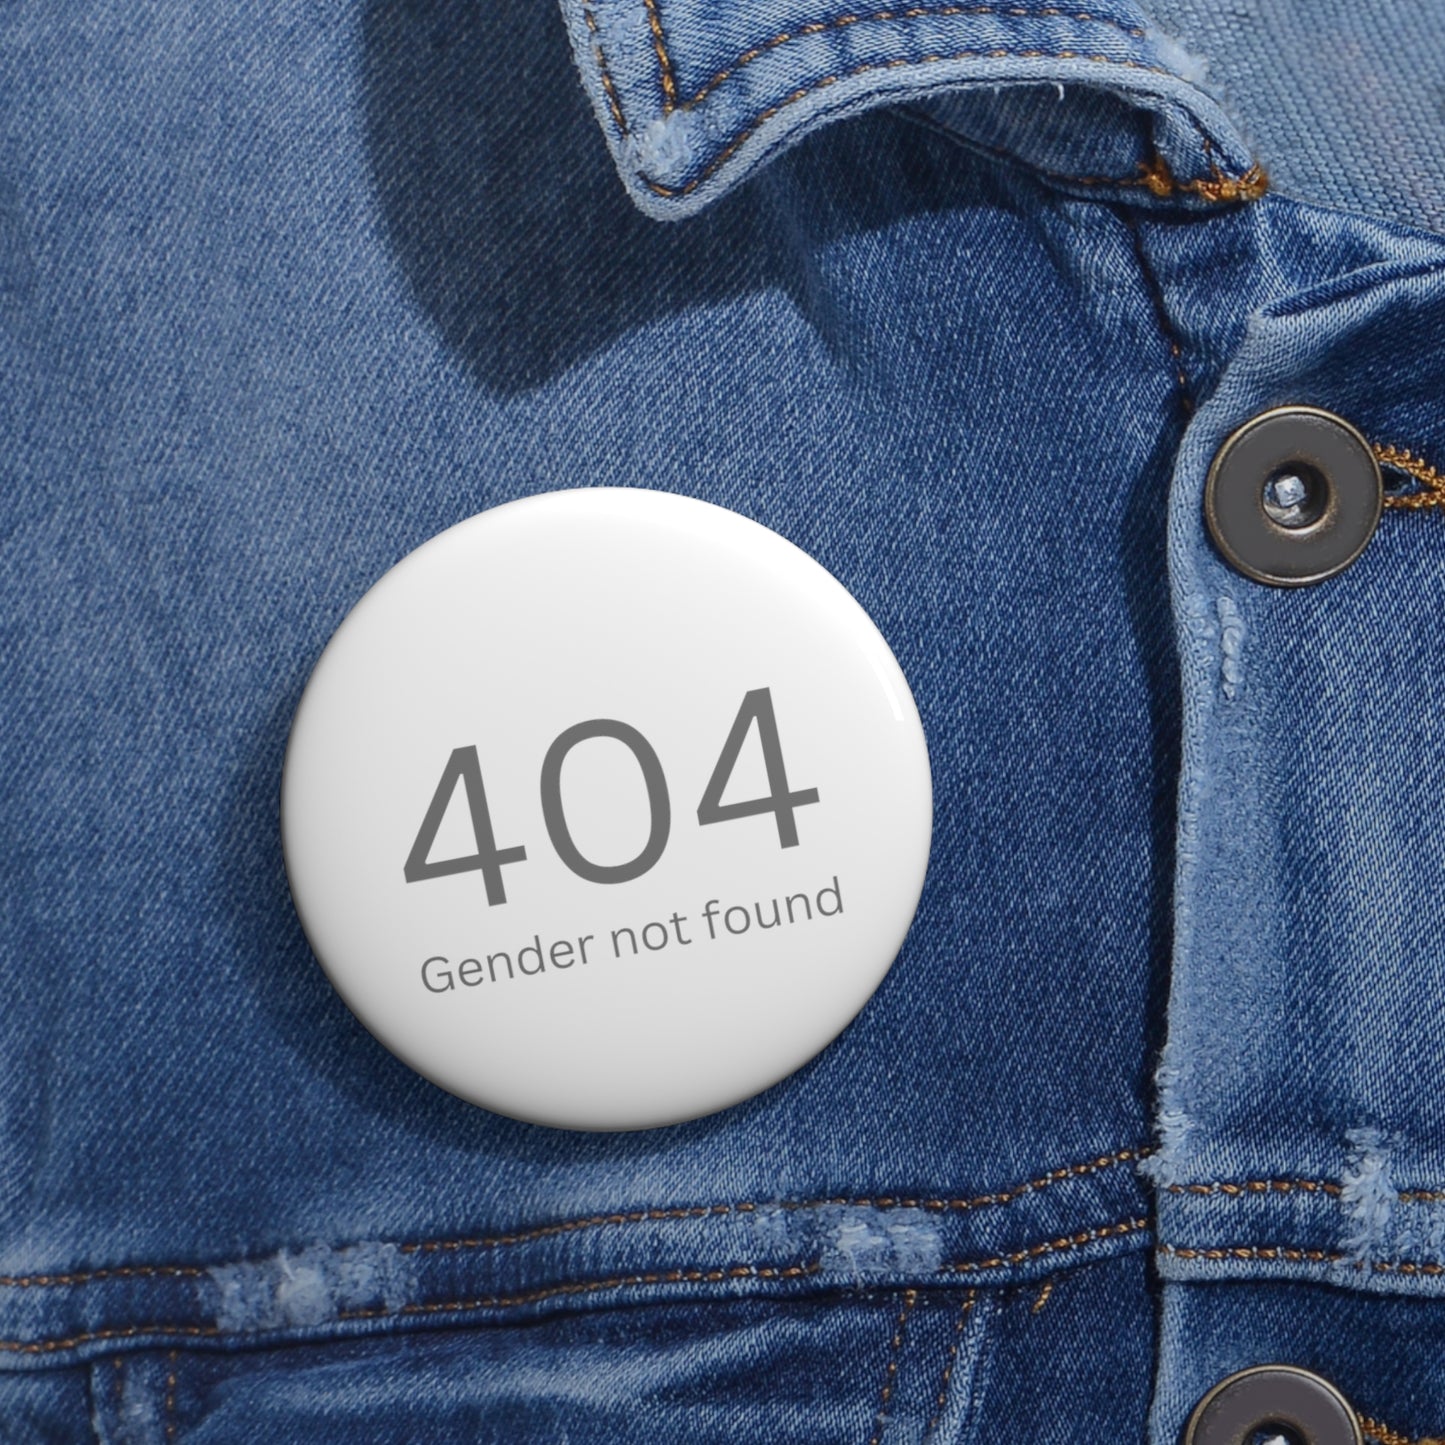 404 Gender not Found - pin button